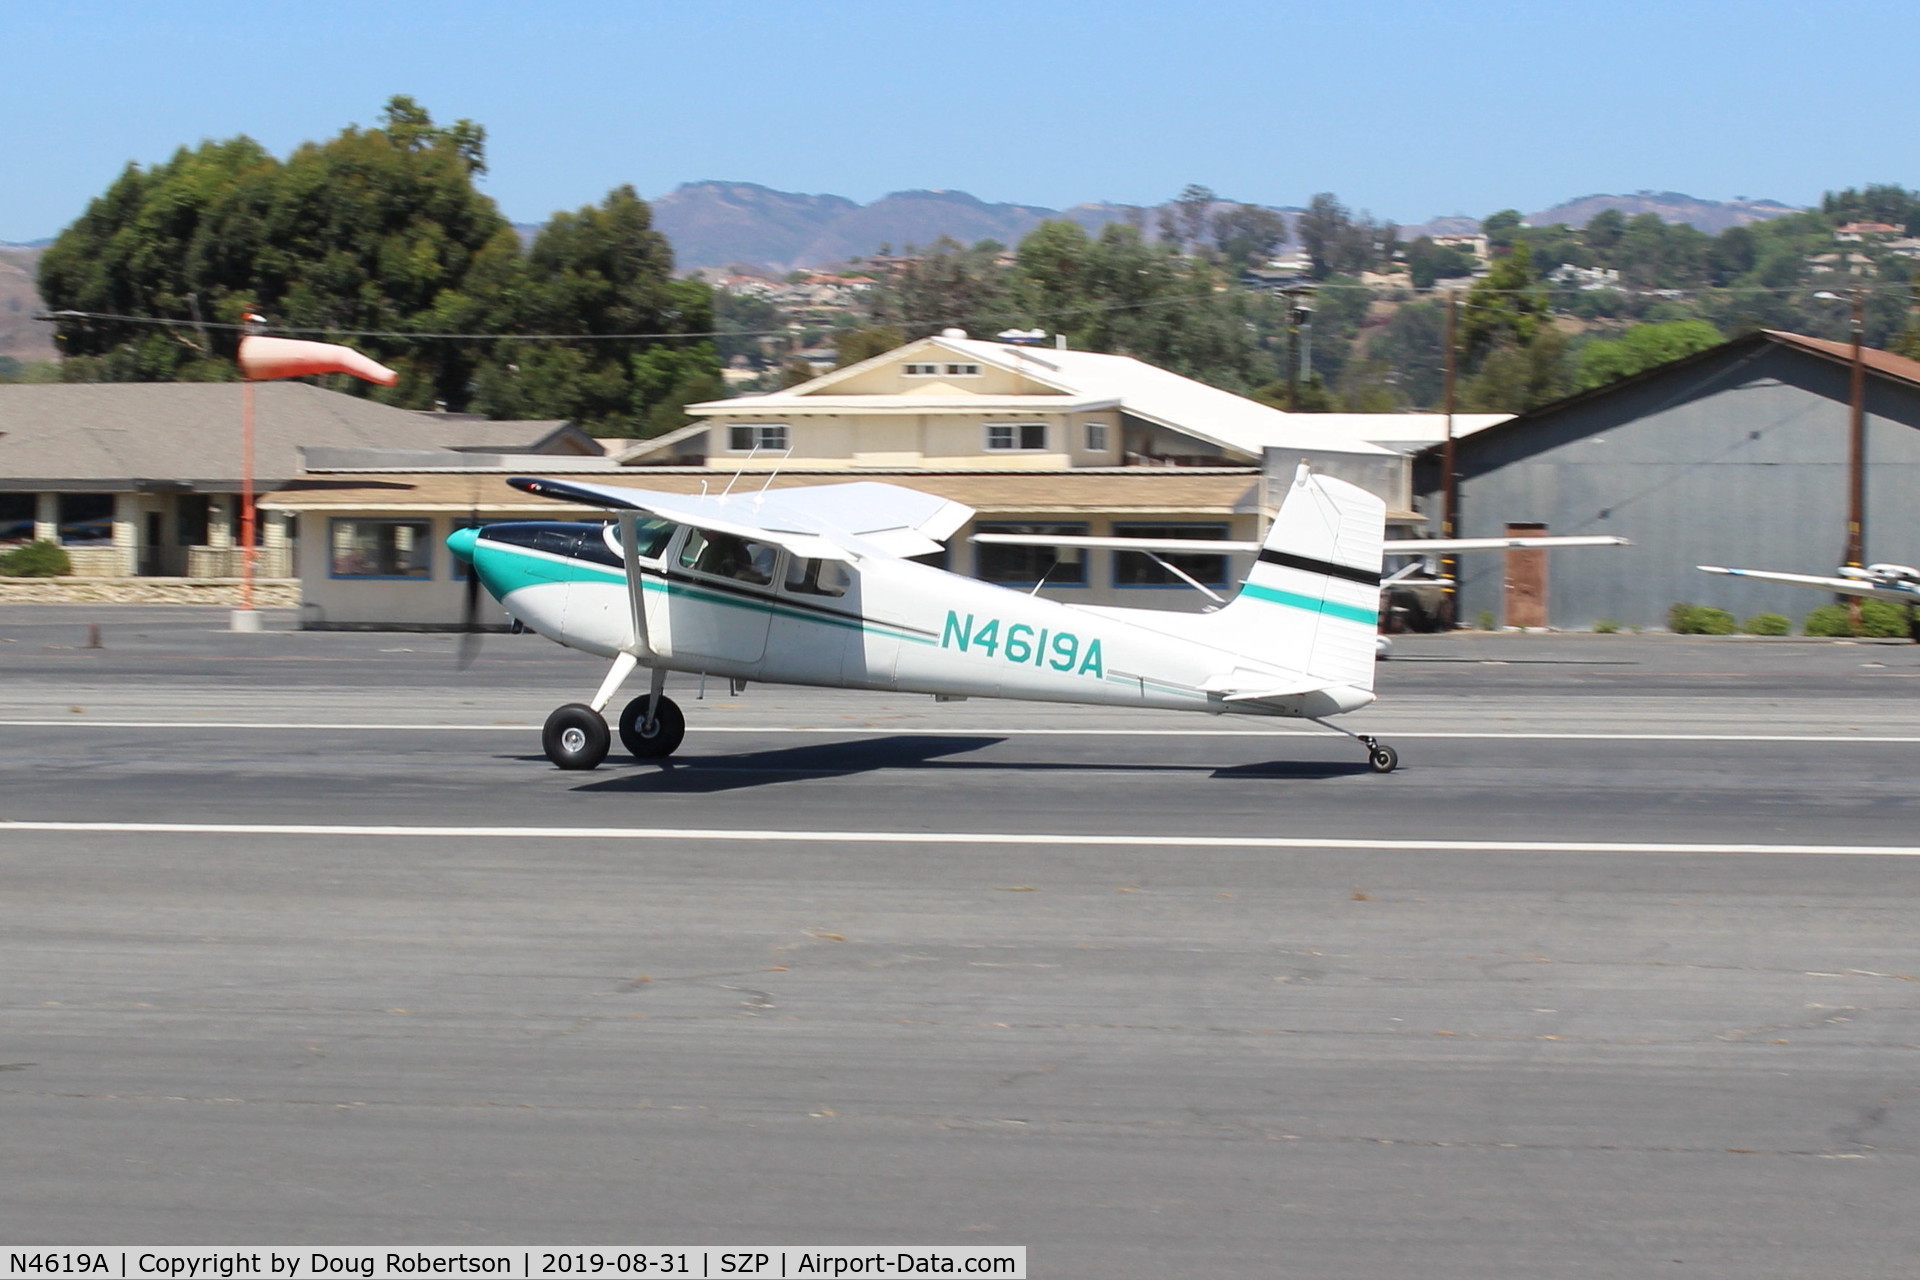 N4619A, 1956 Cessna 180 C/N 32217, 1956 Cessna 180, Continental O-470 230 Hp, landing Roll Rwy 22